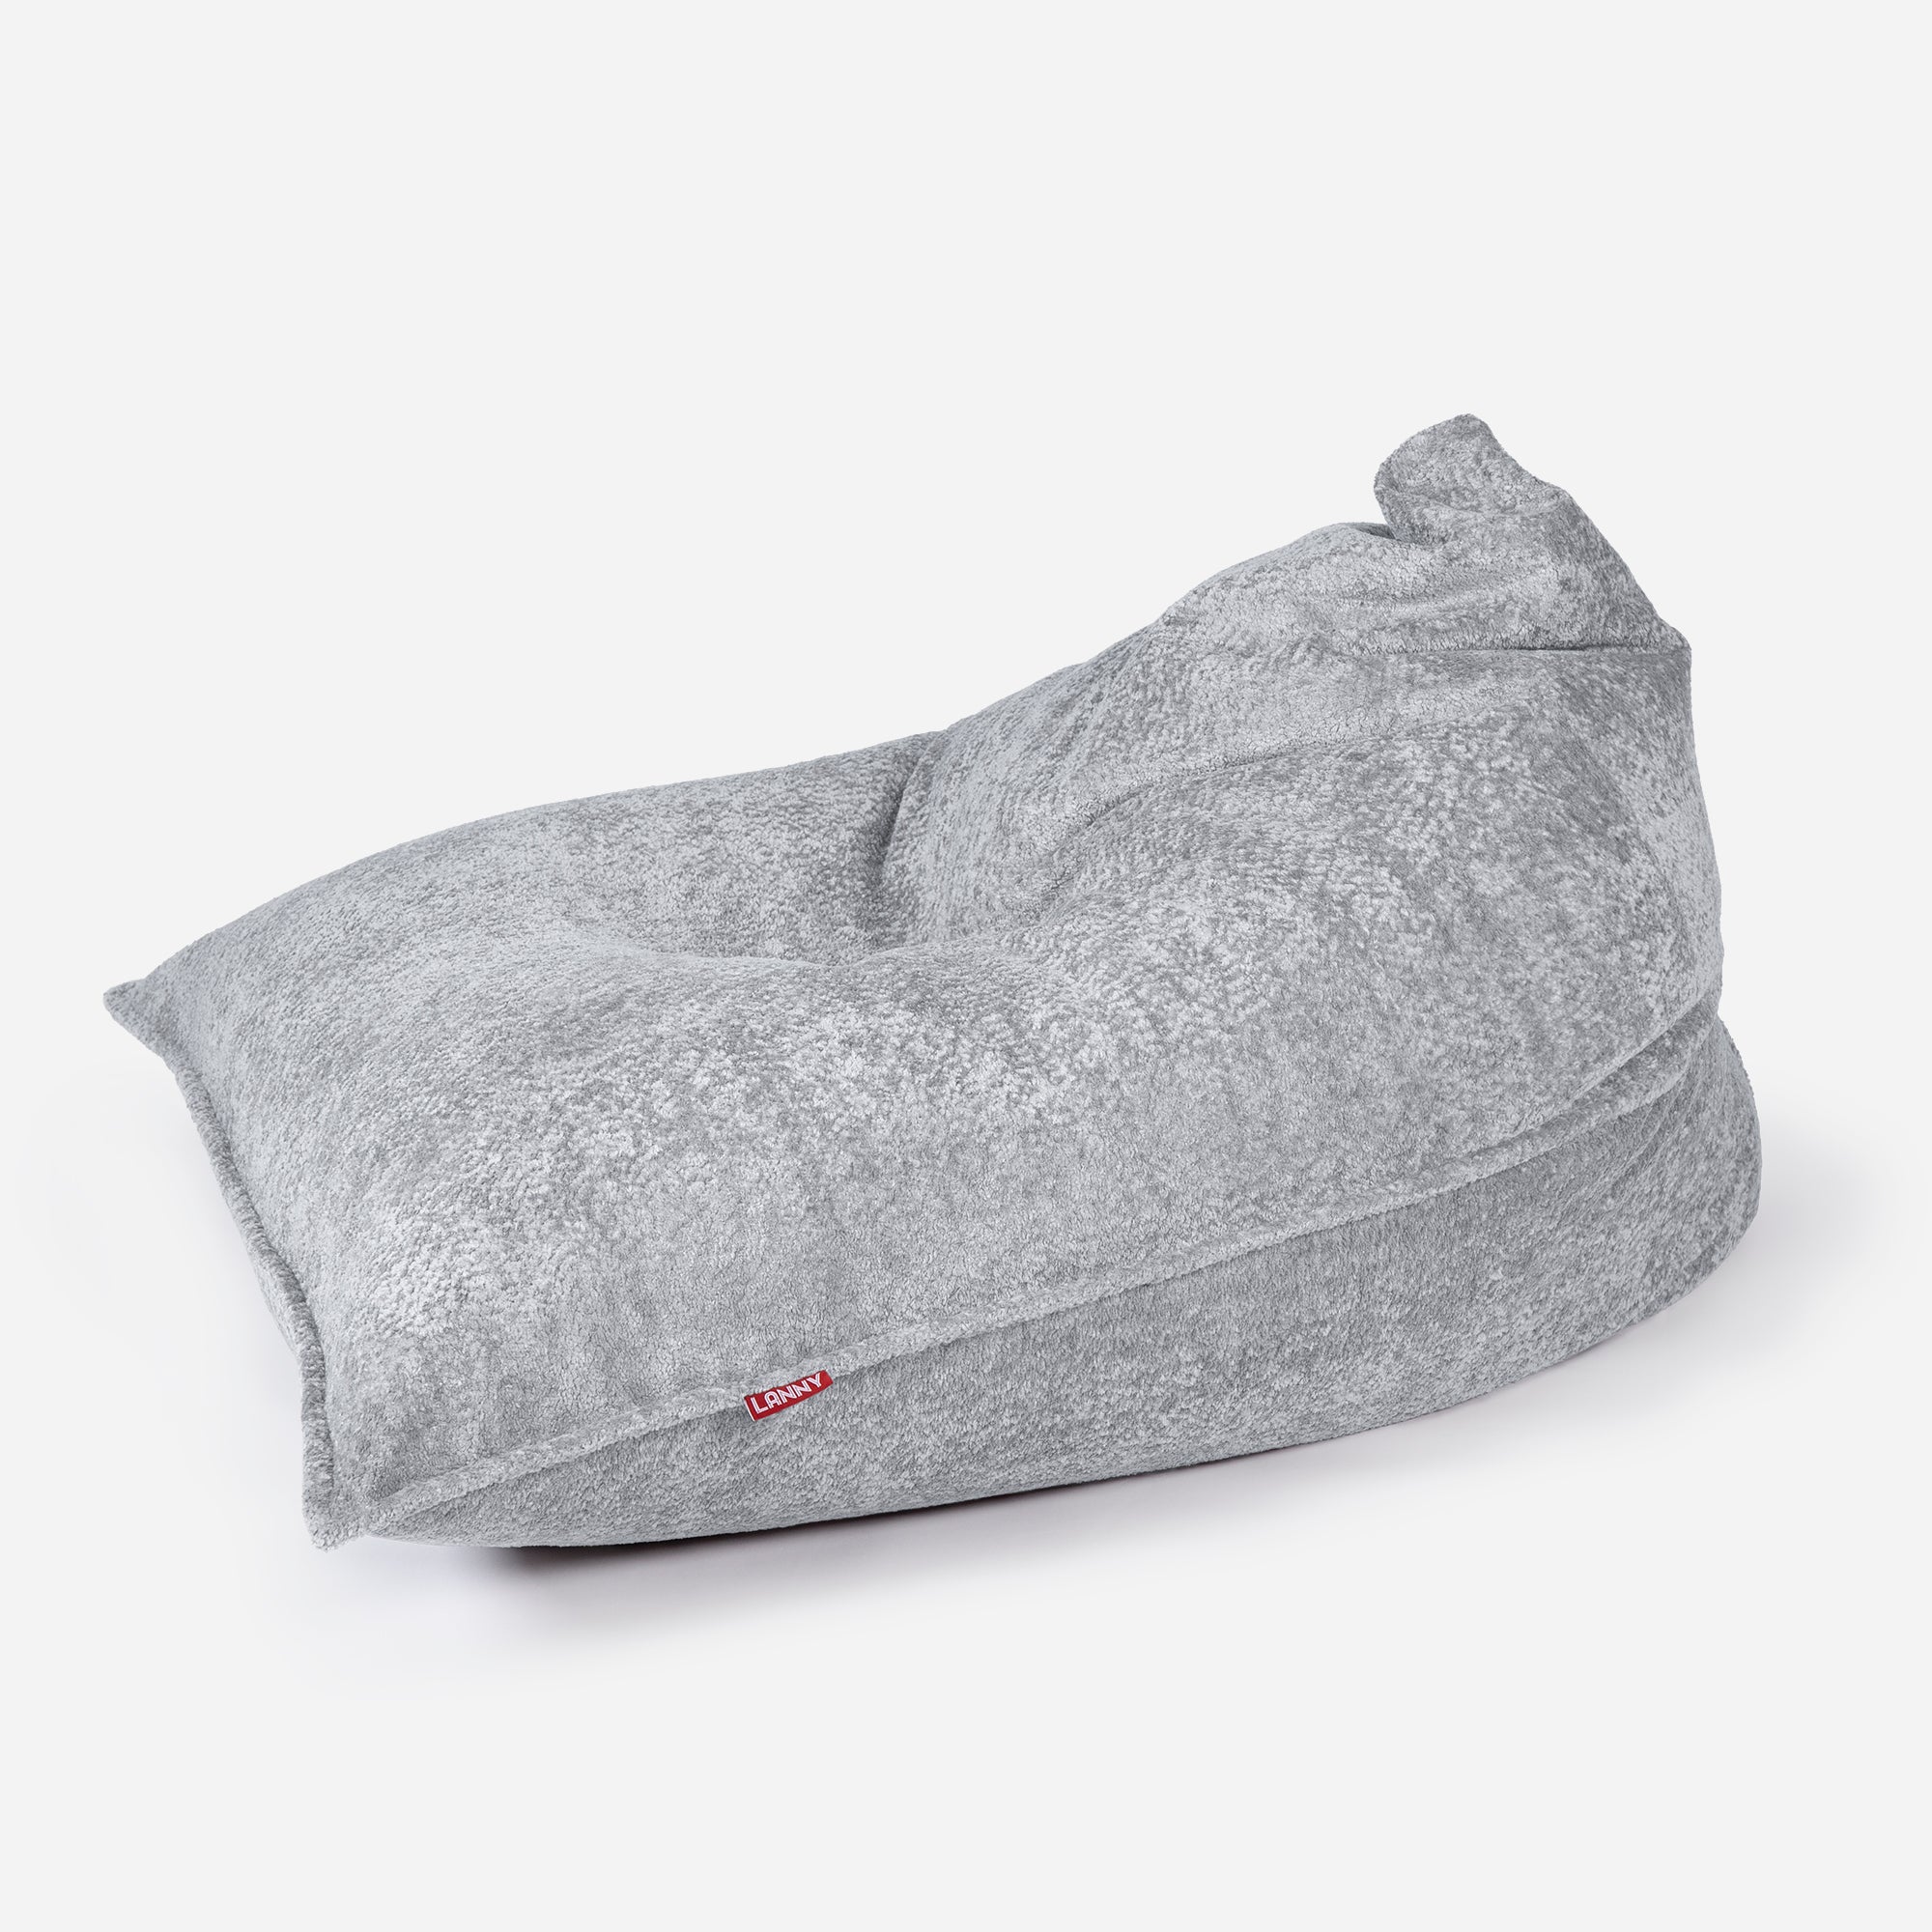 Beanbag Sloppy design fluffy fabric Gray color